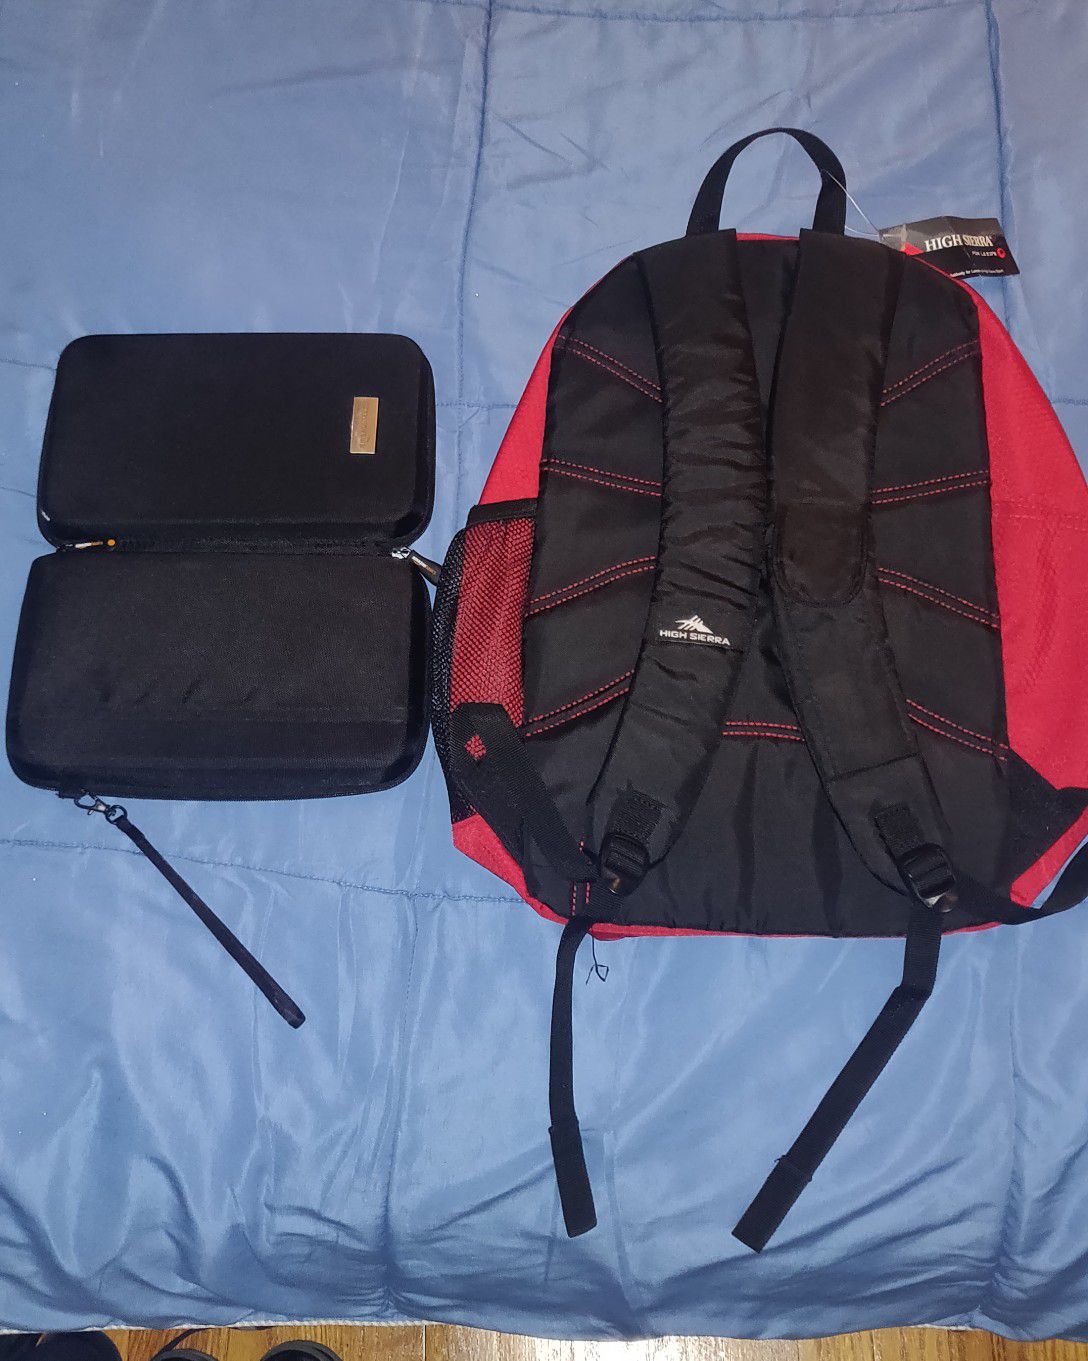 Backpack and electronics bag